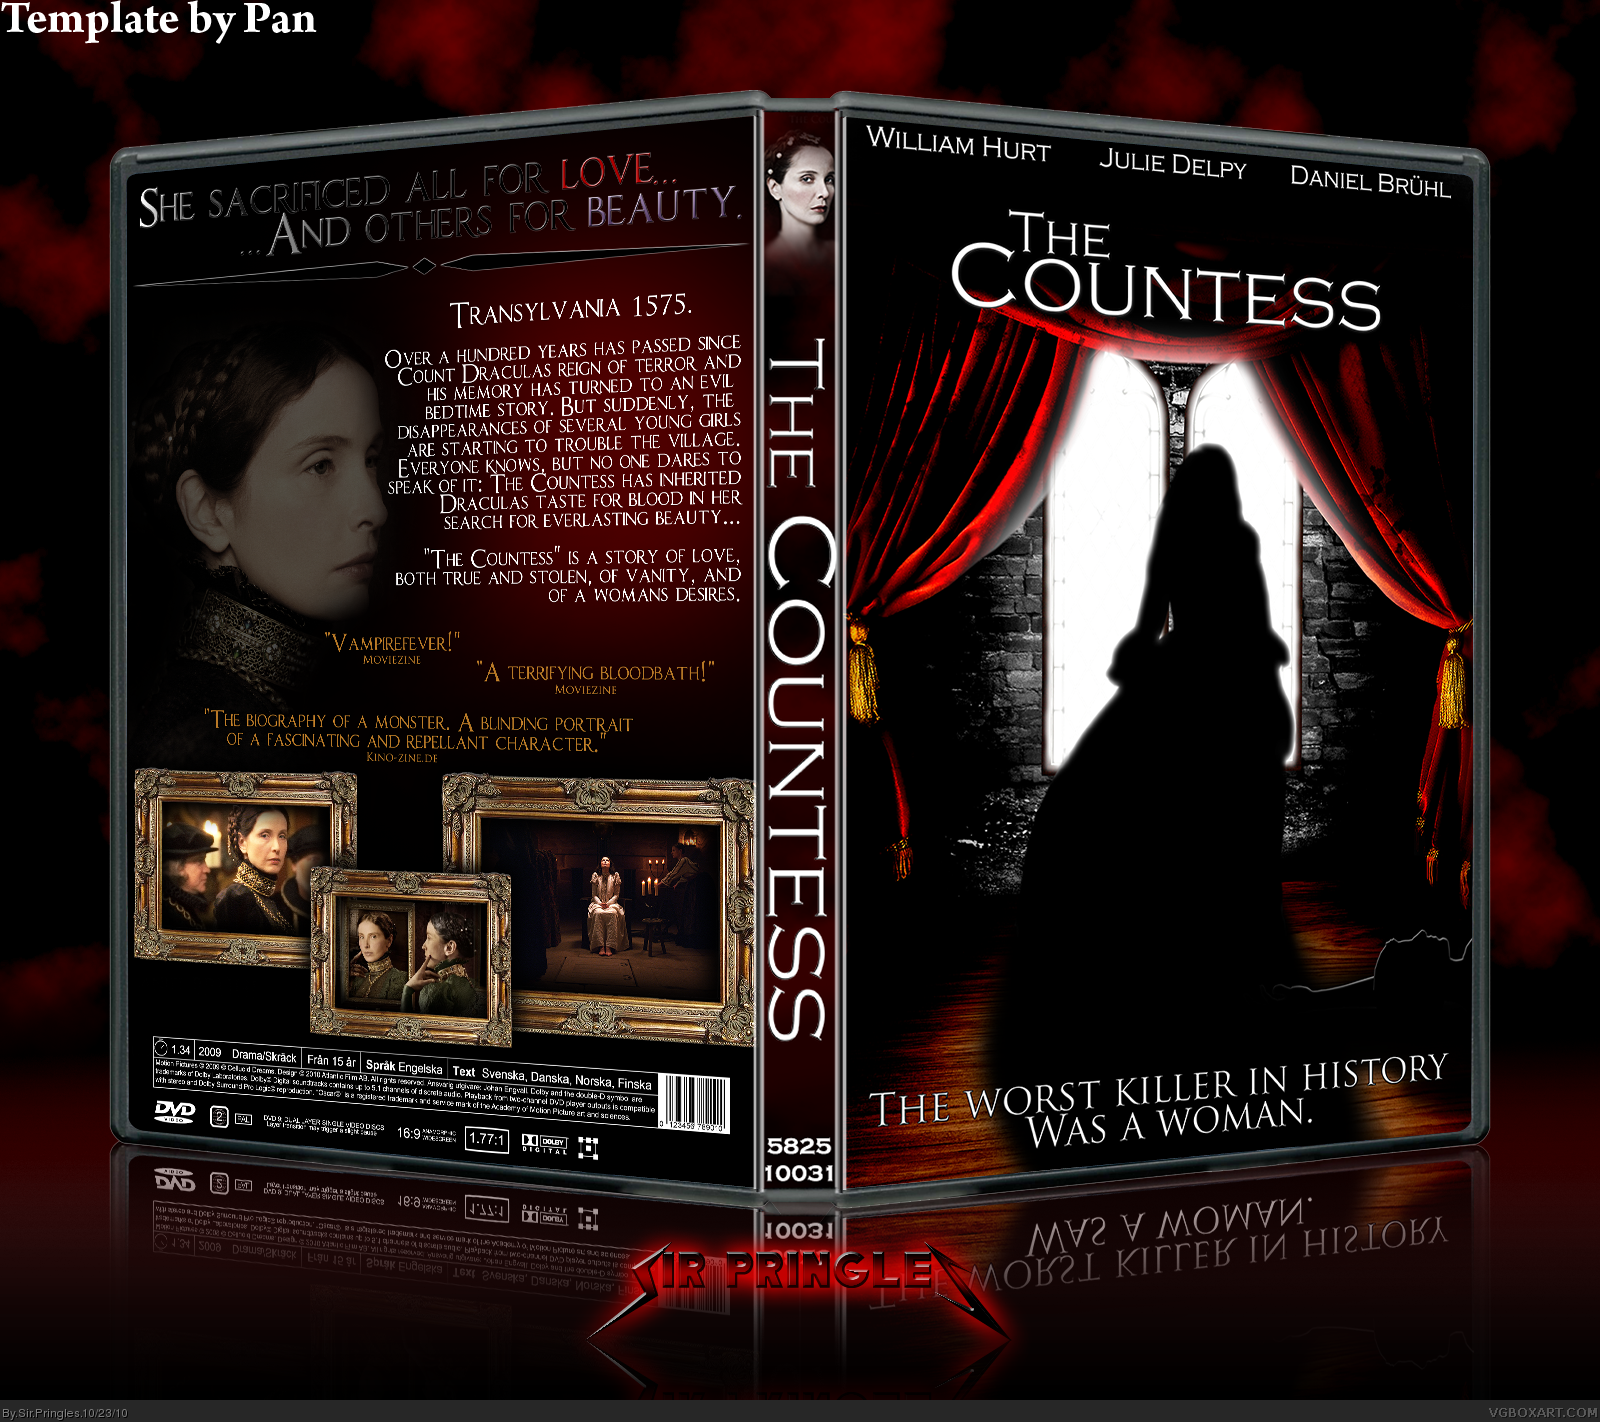 The Countess box cover